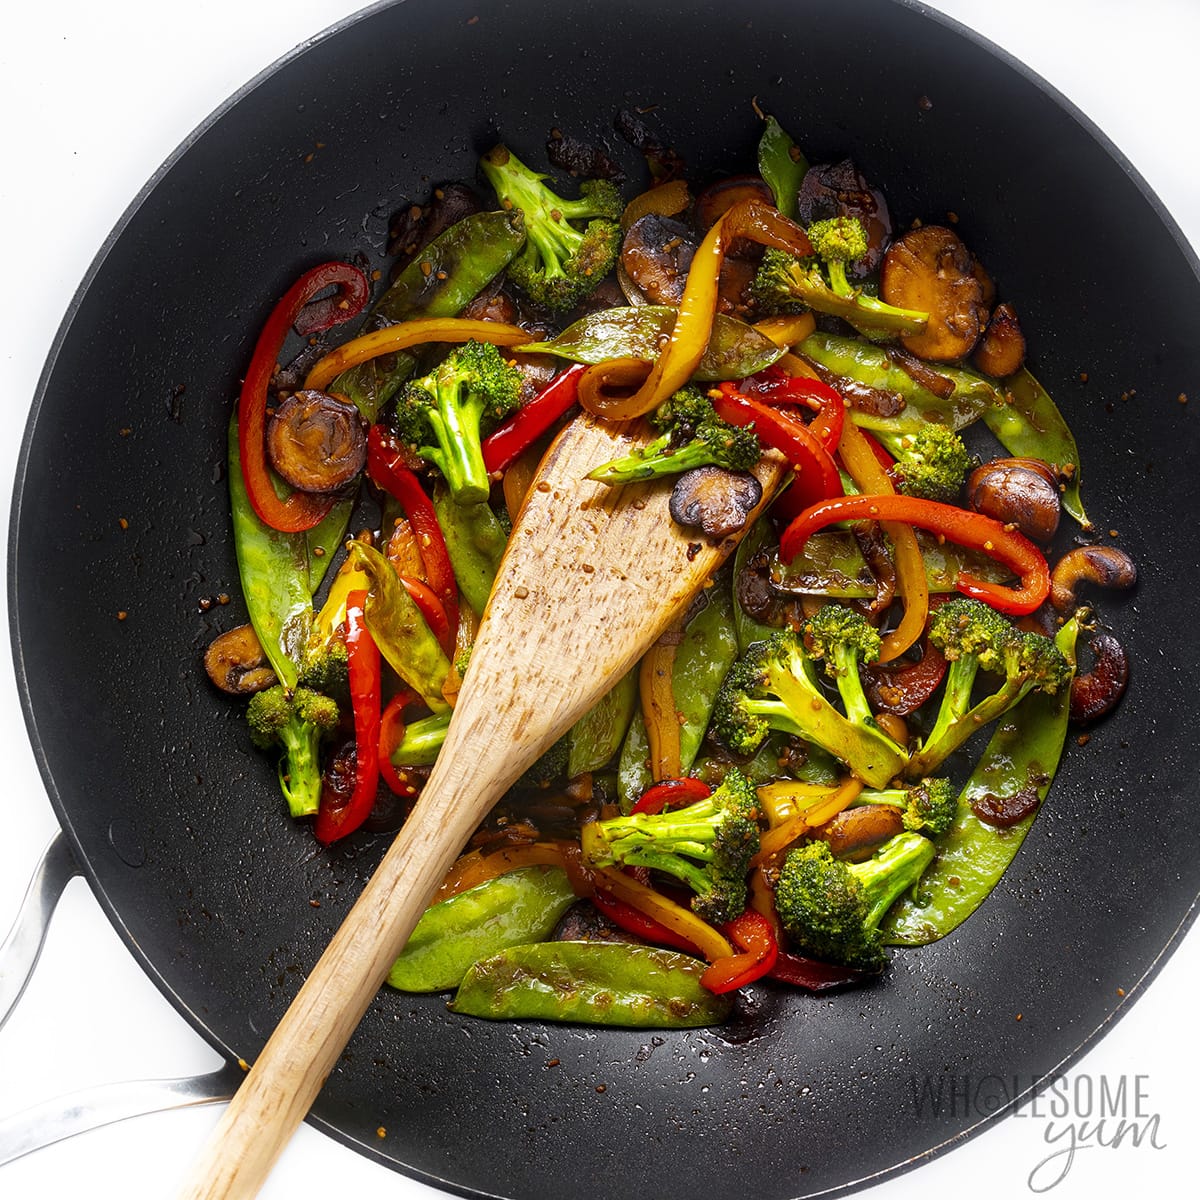 Stir-Fry Your Vegetables: Heat a wok or large pan over high heat and stir-fry your chosen vegetables until they’re tender-crisp.